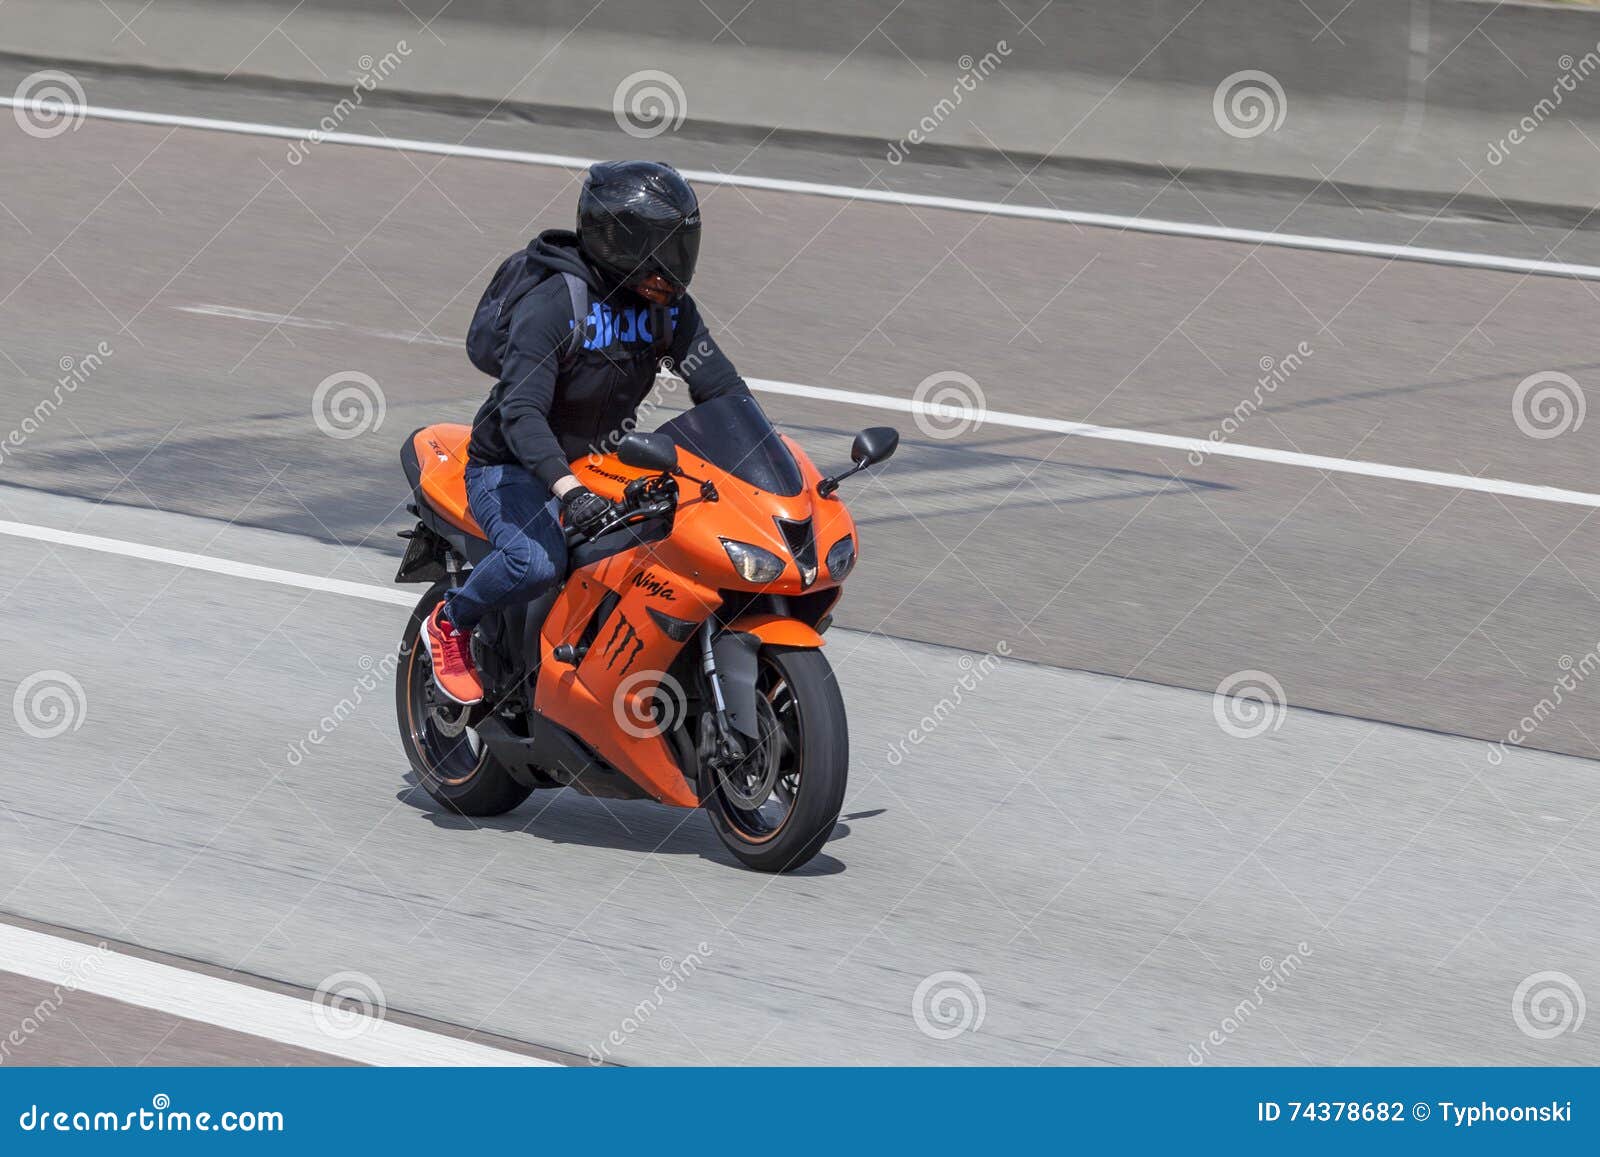 Motorcyclist on the Kawasaki Ninja Editorial Photography - Image of journey, travel: